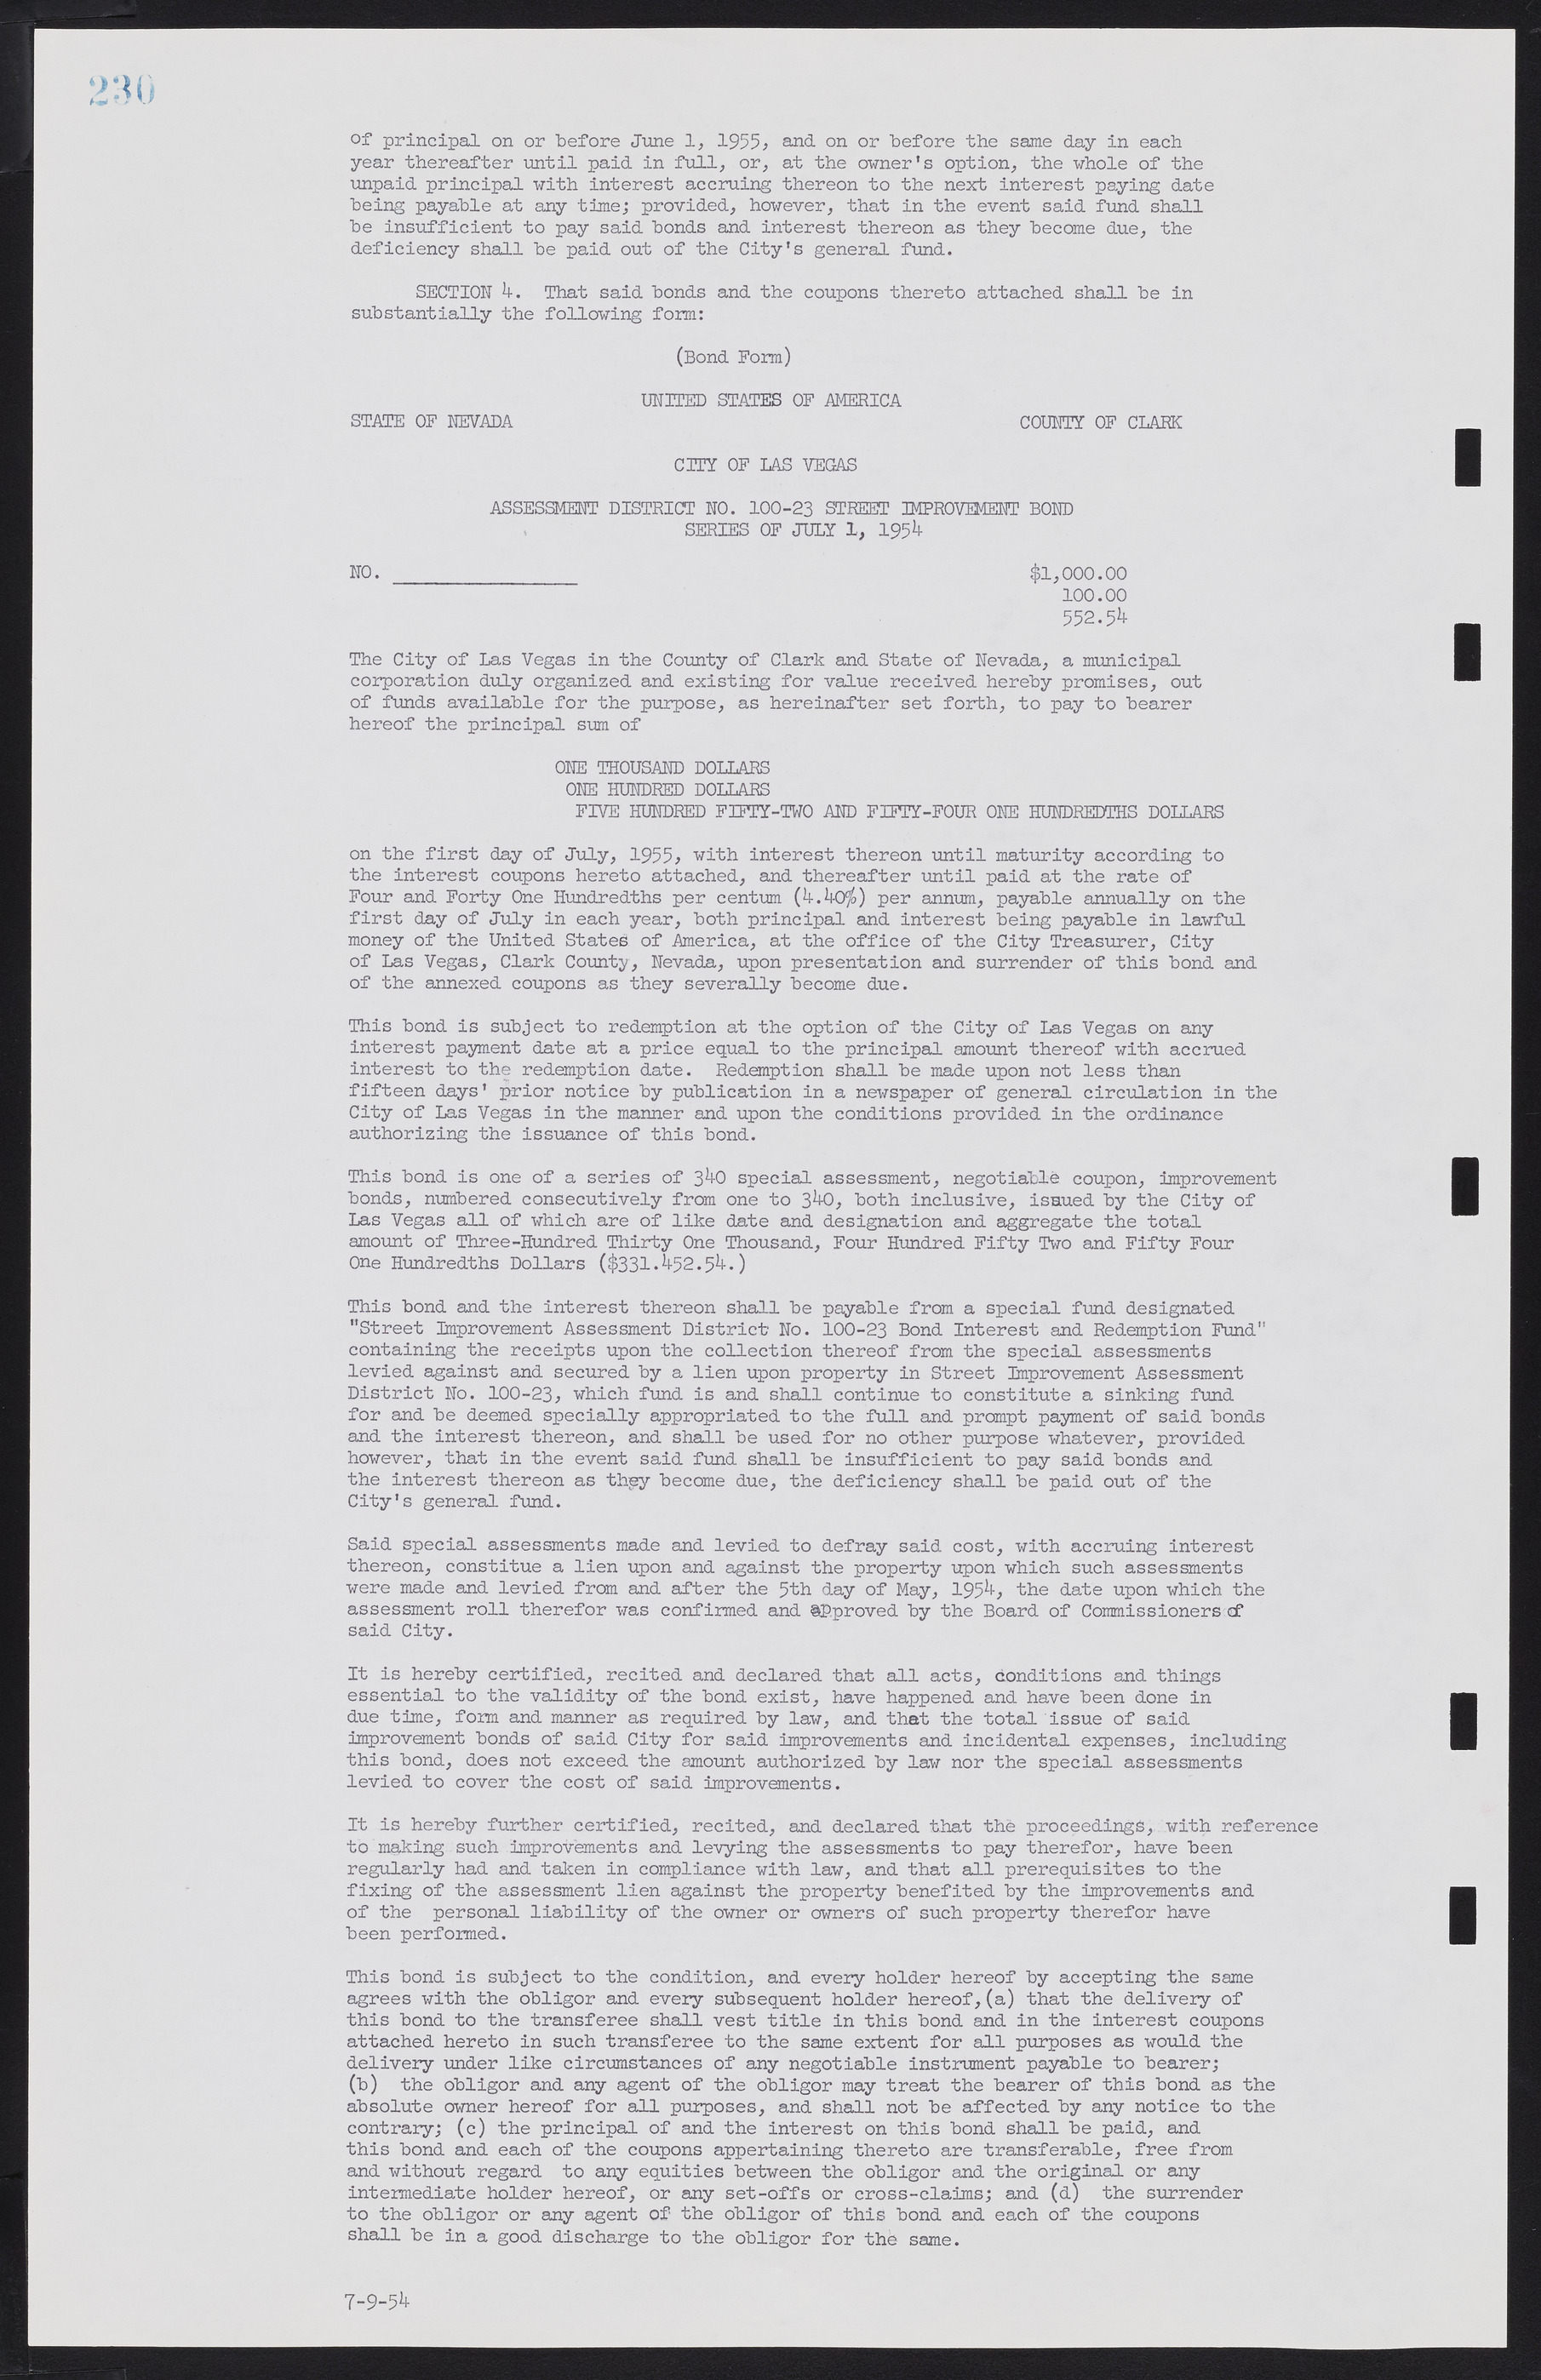 Las Vegas City Commission Minutes, February 17, 1954 to September 21, 1955, lvc000009-236